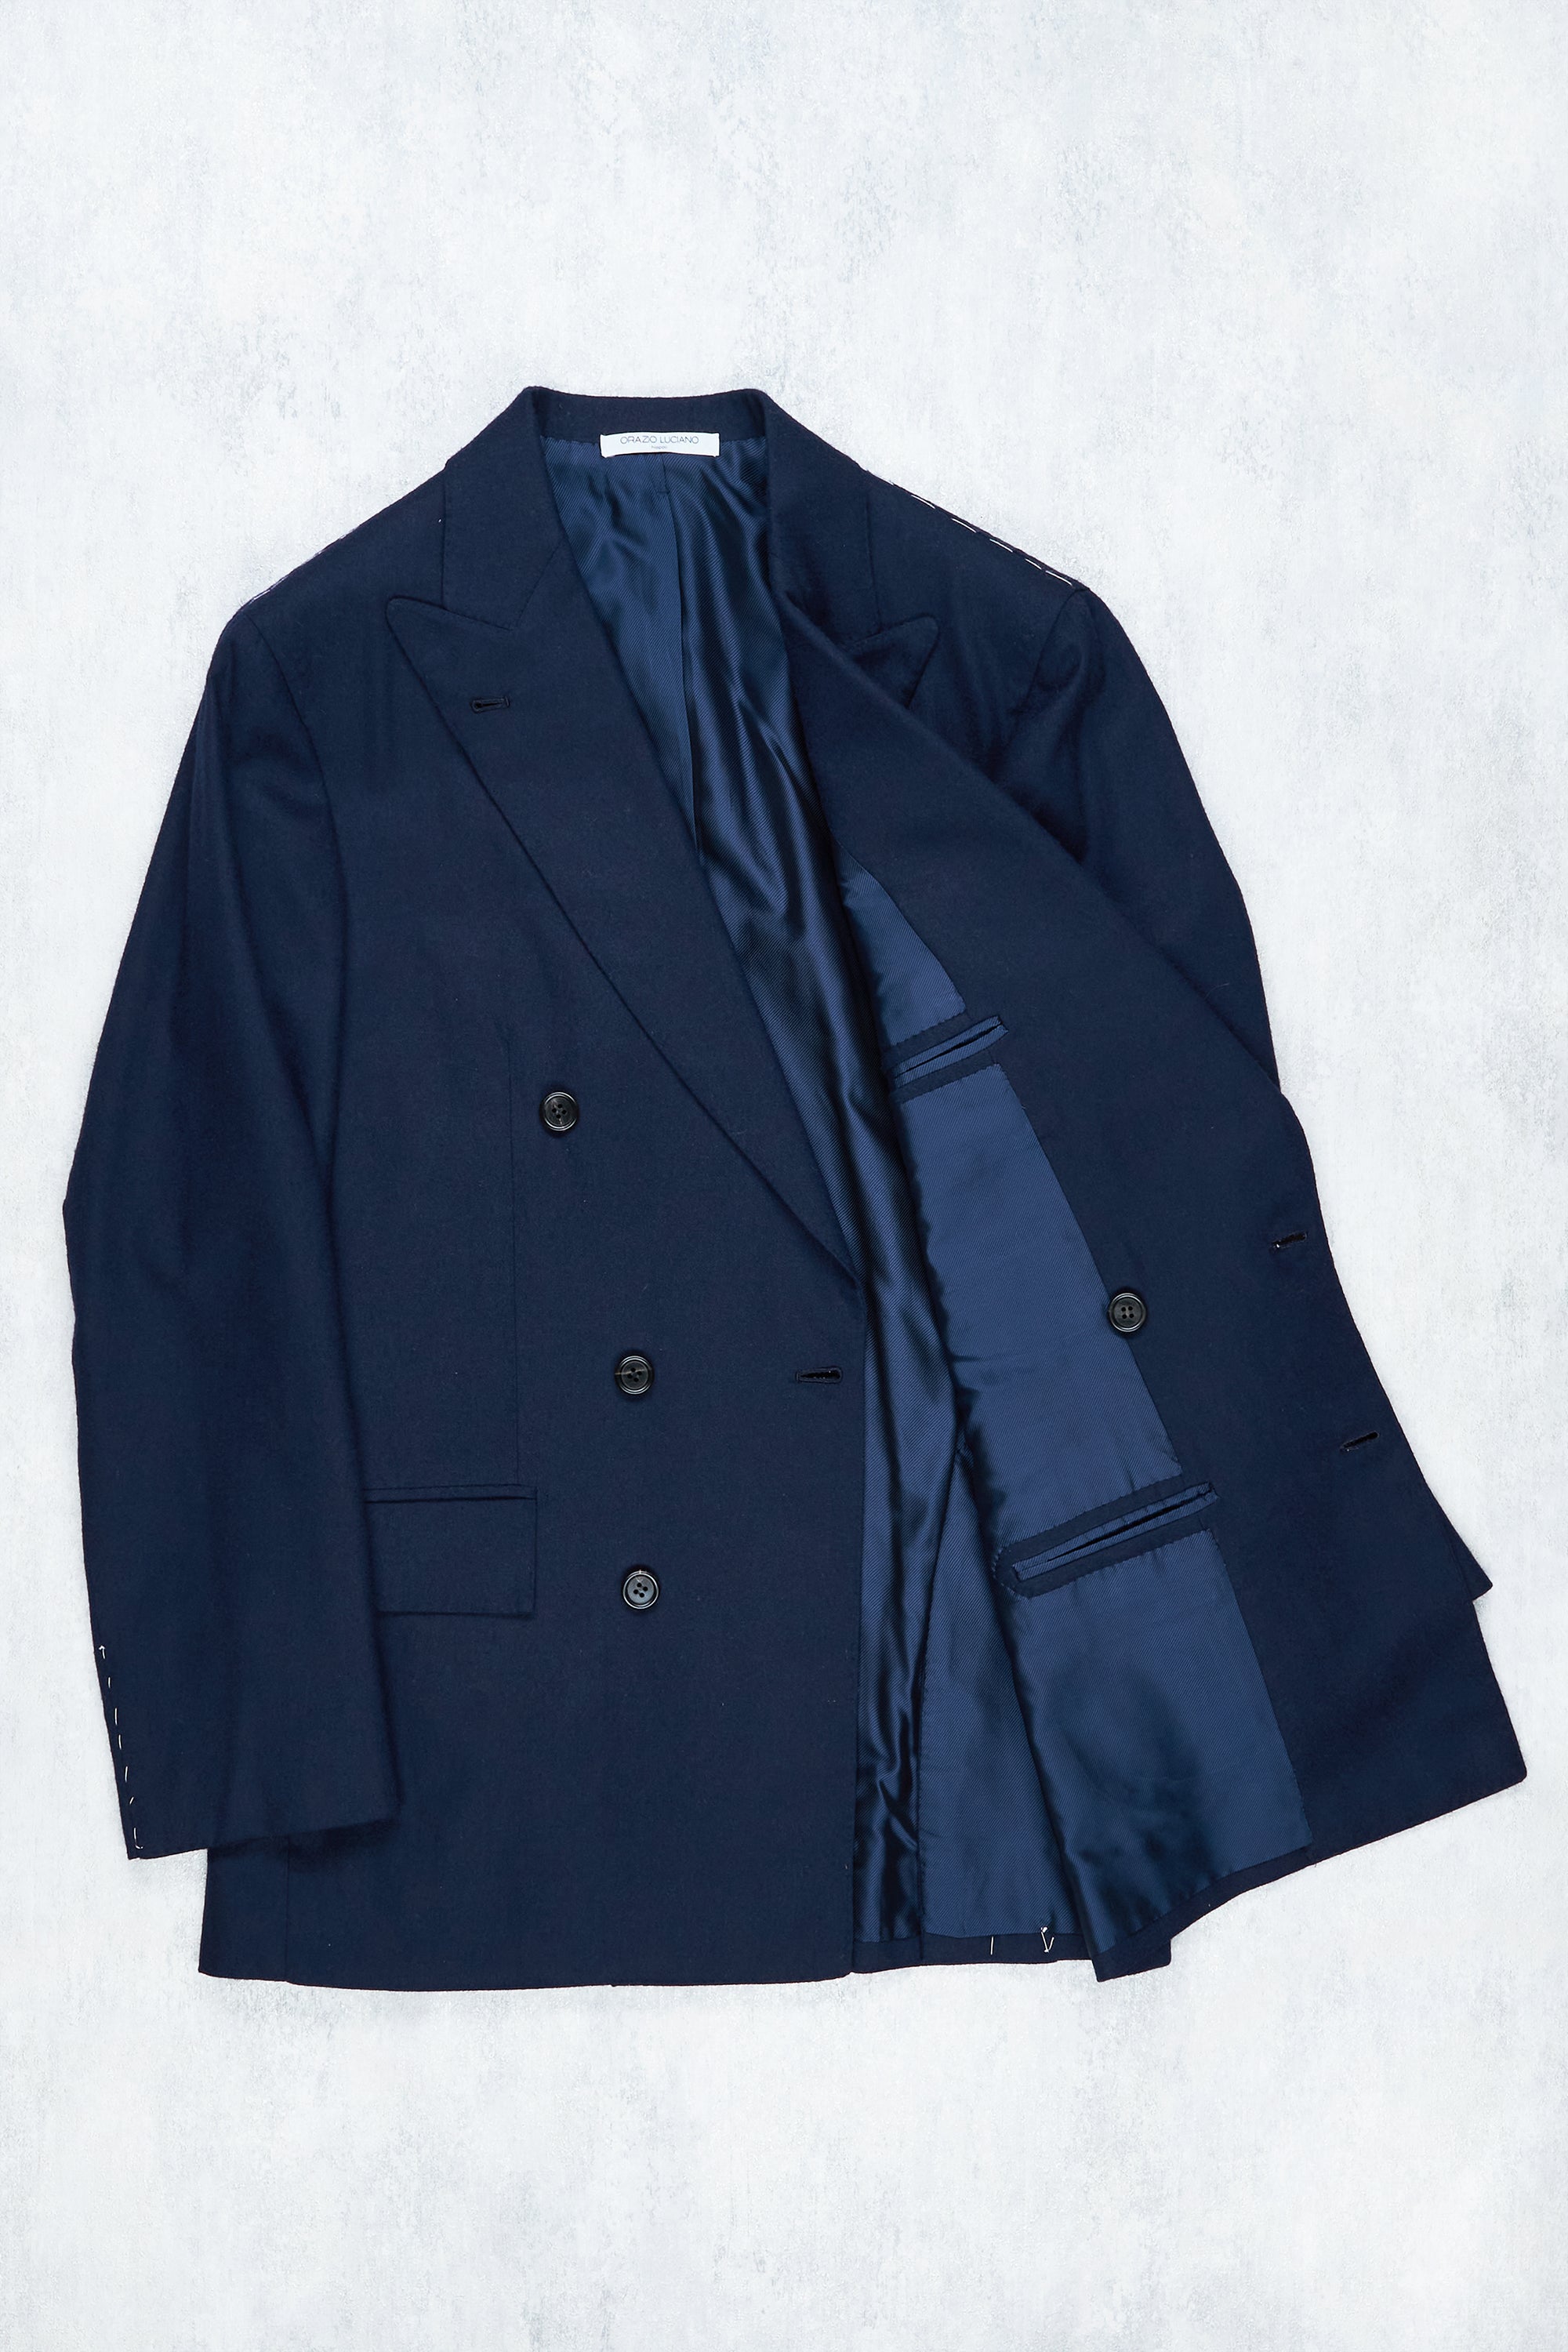 Orazio Luciano Navy Twill Wool DB Sport Coat